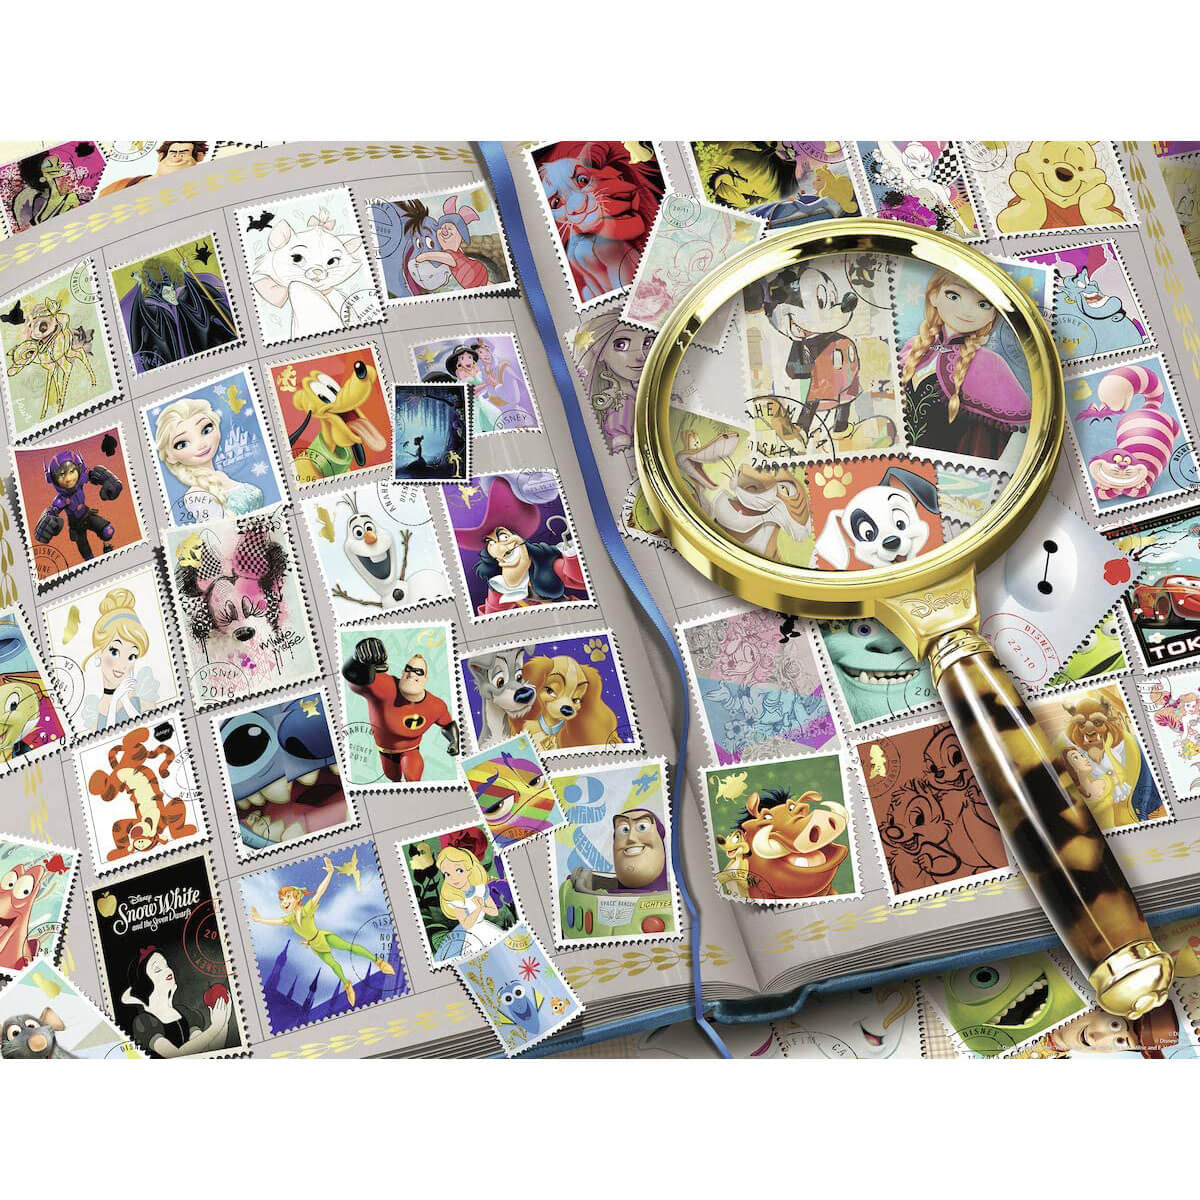 Ravensburger Disney Stamp Album 2000 Piece Jigsaw Puzzle